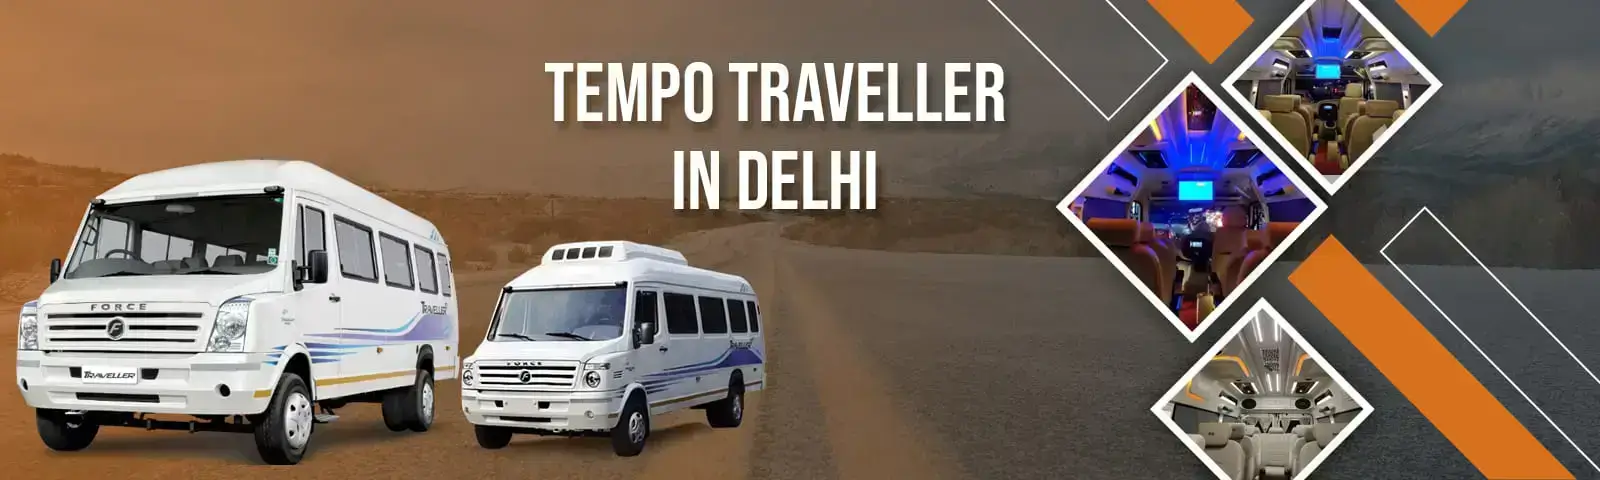 Tempo Traveller Rental Delhi